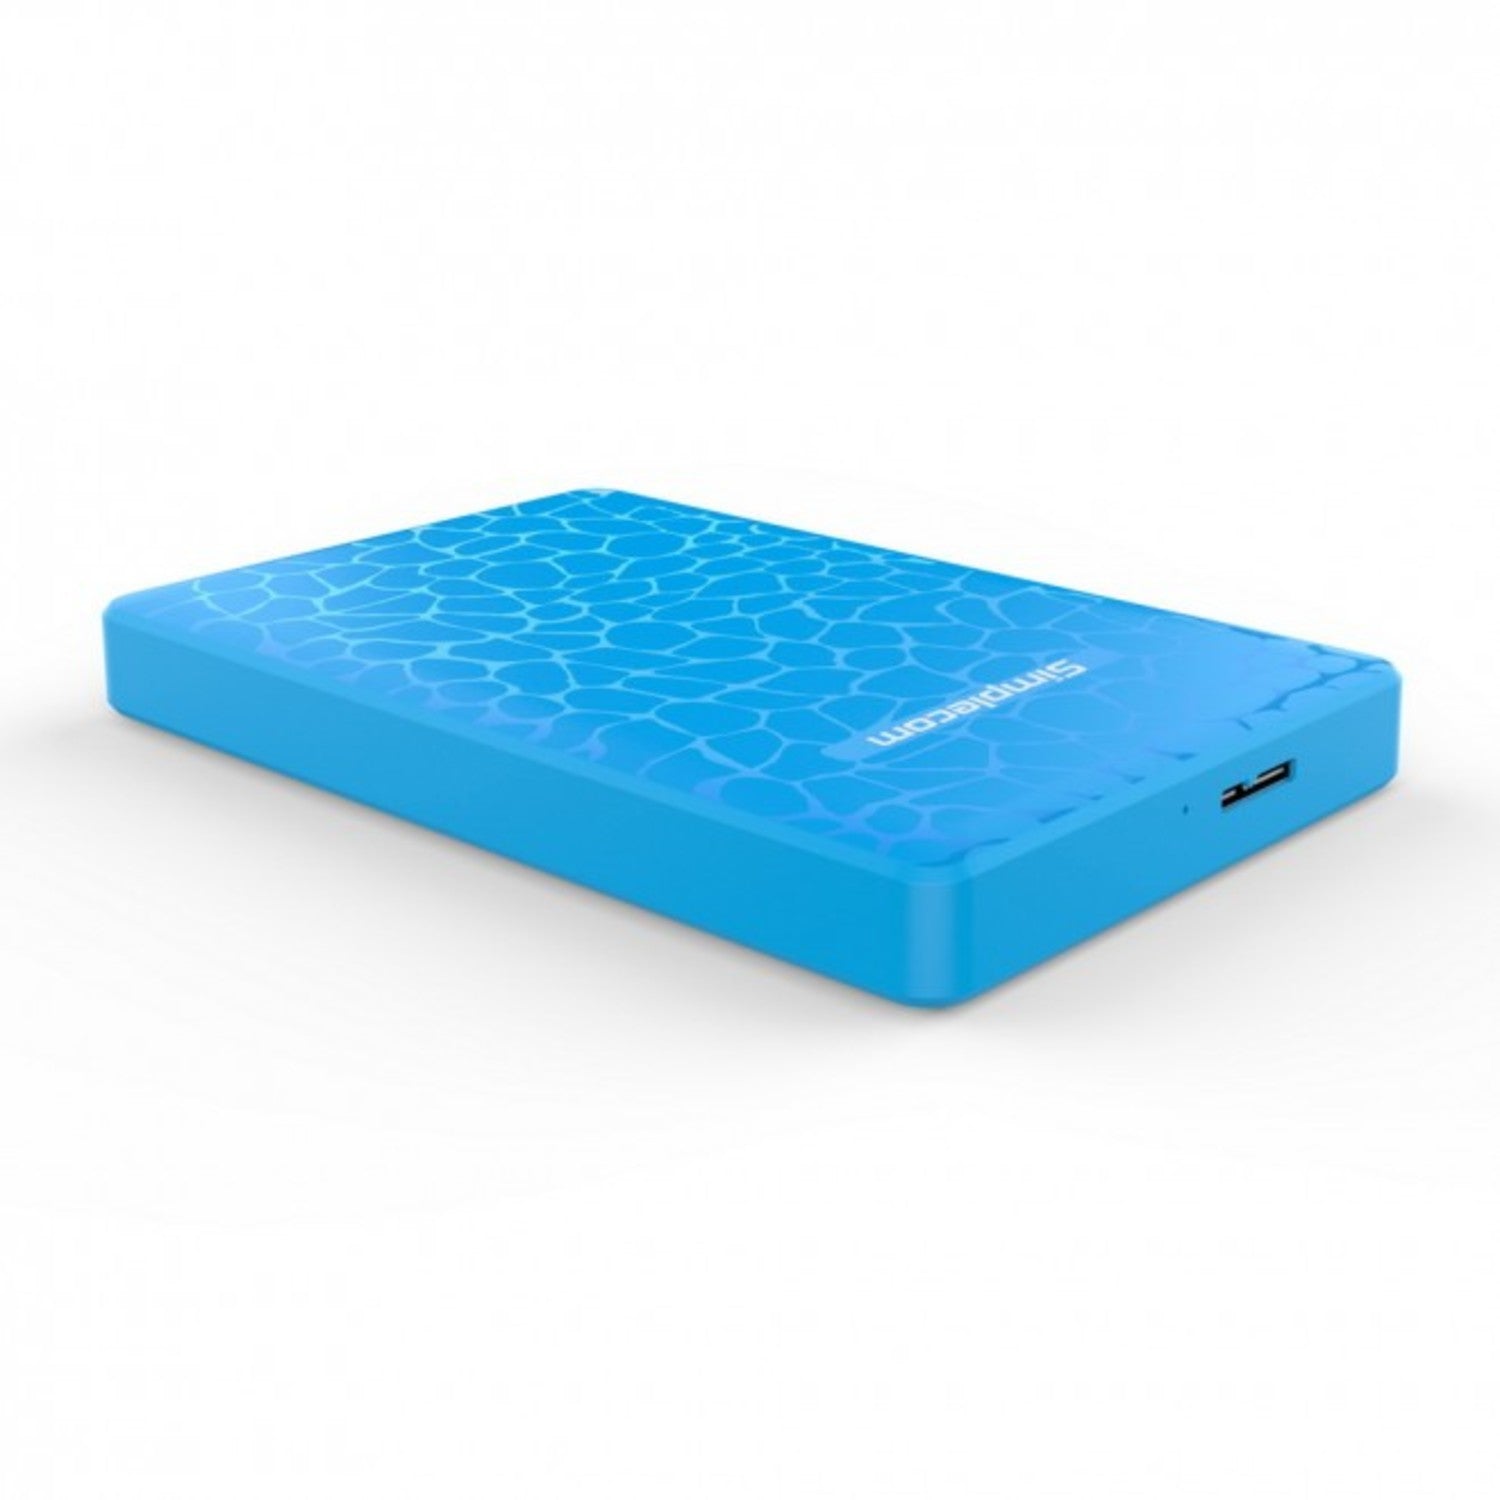 Simplecom SE101-BL Compact Tool Free 2.5'' SATA to USB 3.0 HDD/SSD Enclosure Blue